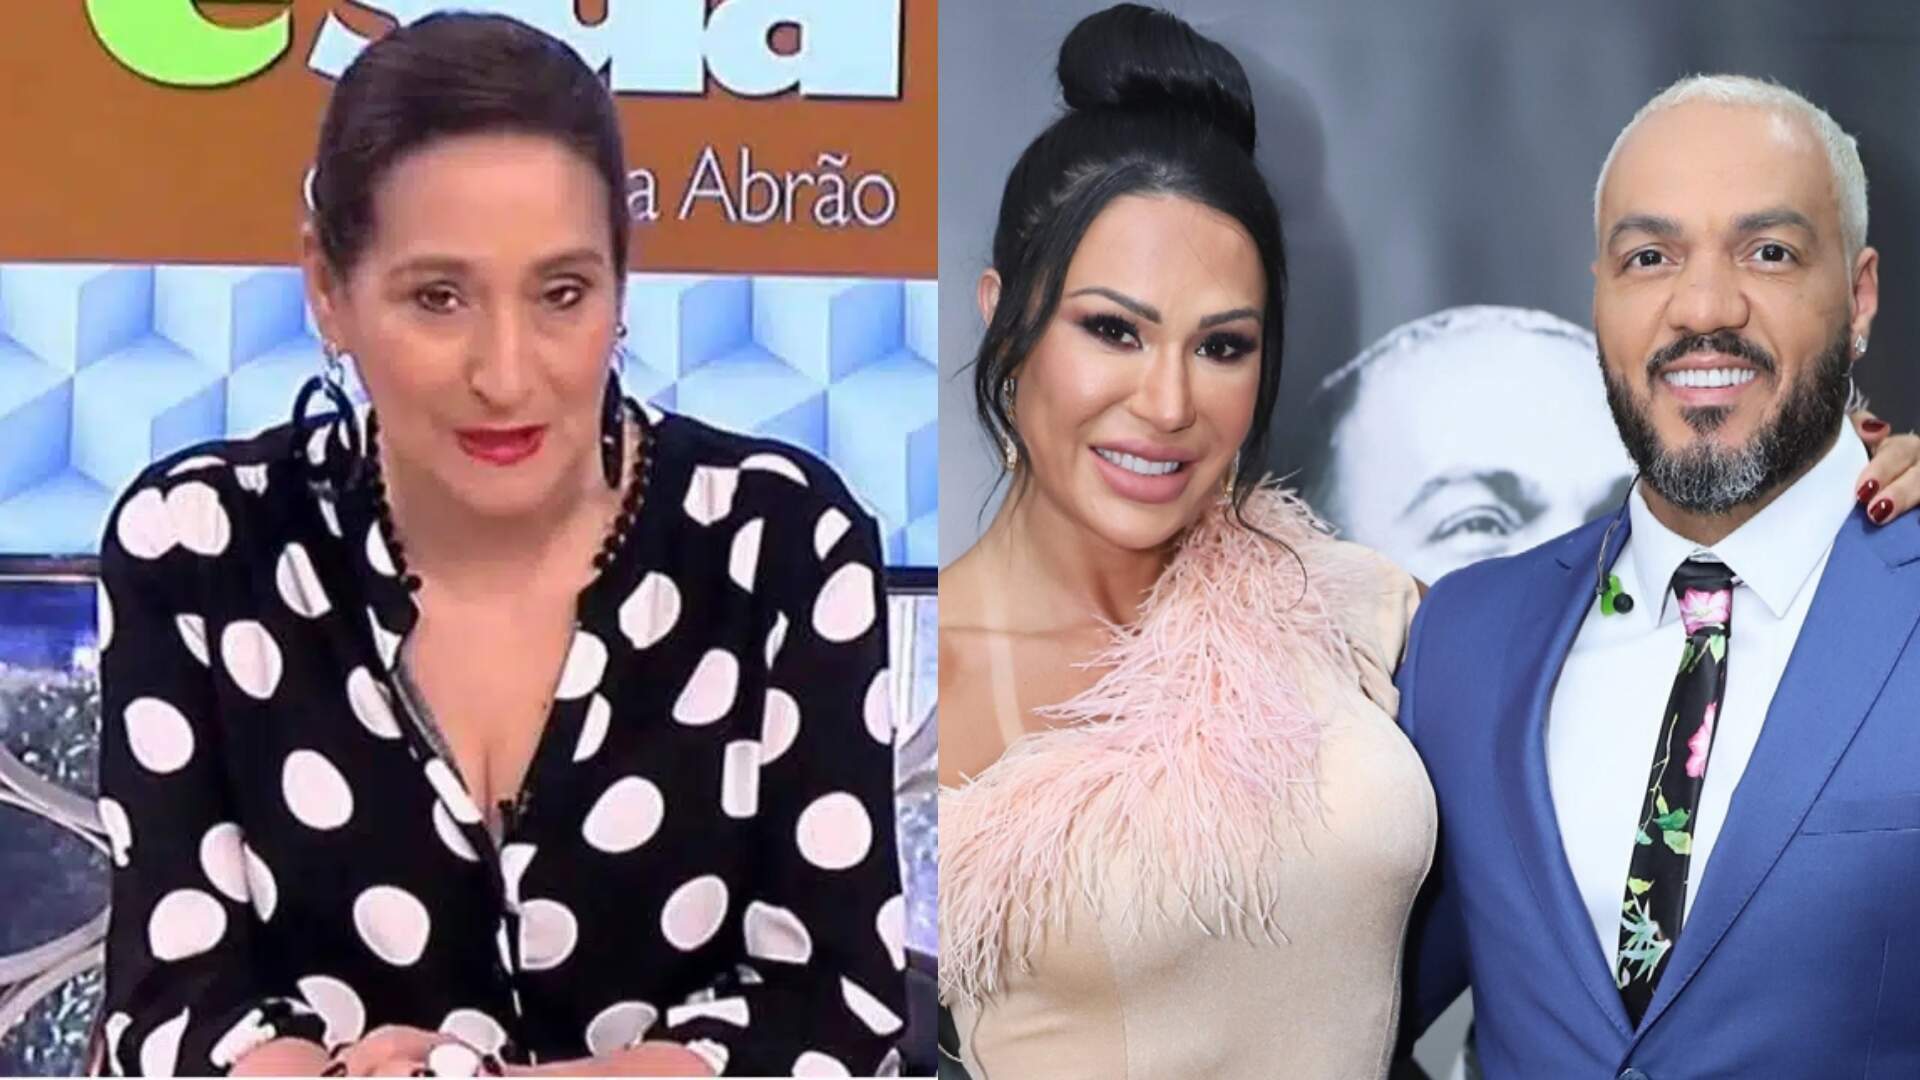 Ao vivo, Sonia Abrão expõe toda a farsa envolvendo o divórcio entre Belo e Gracyanne